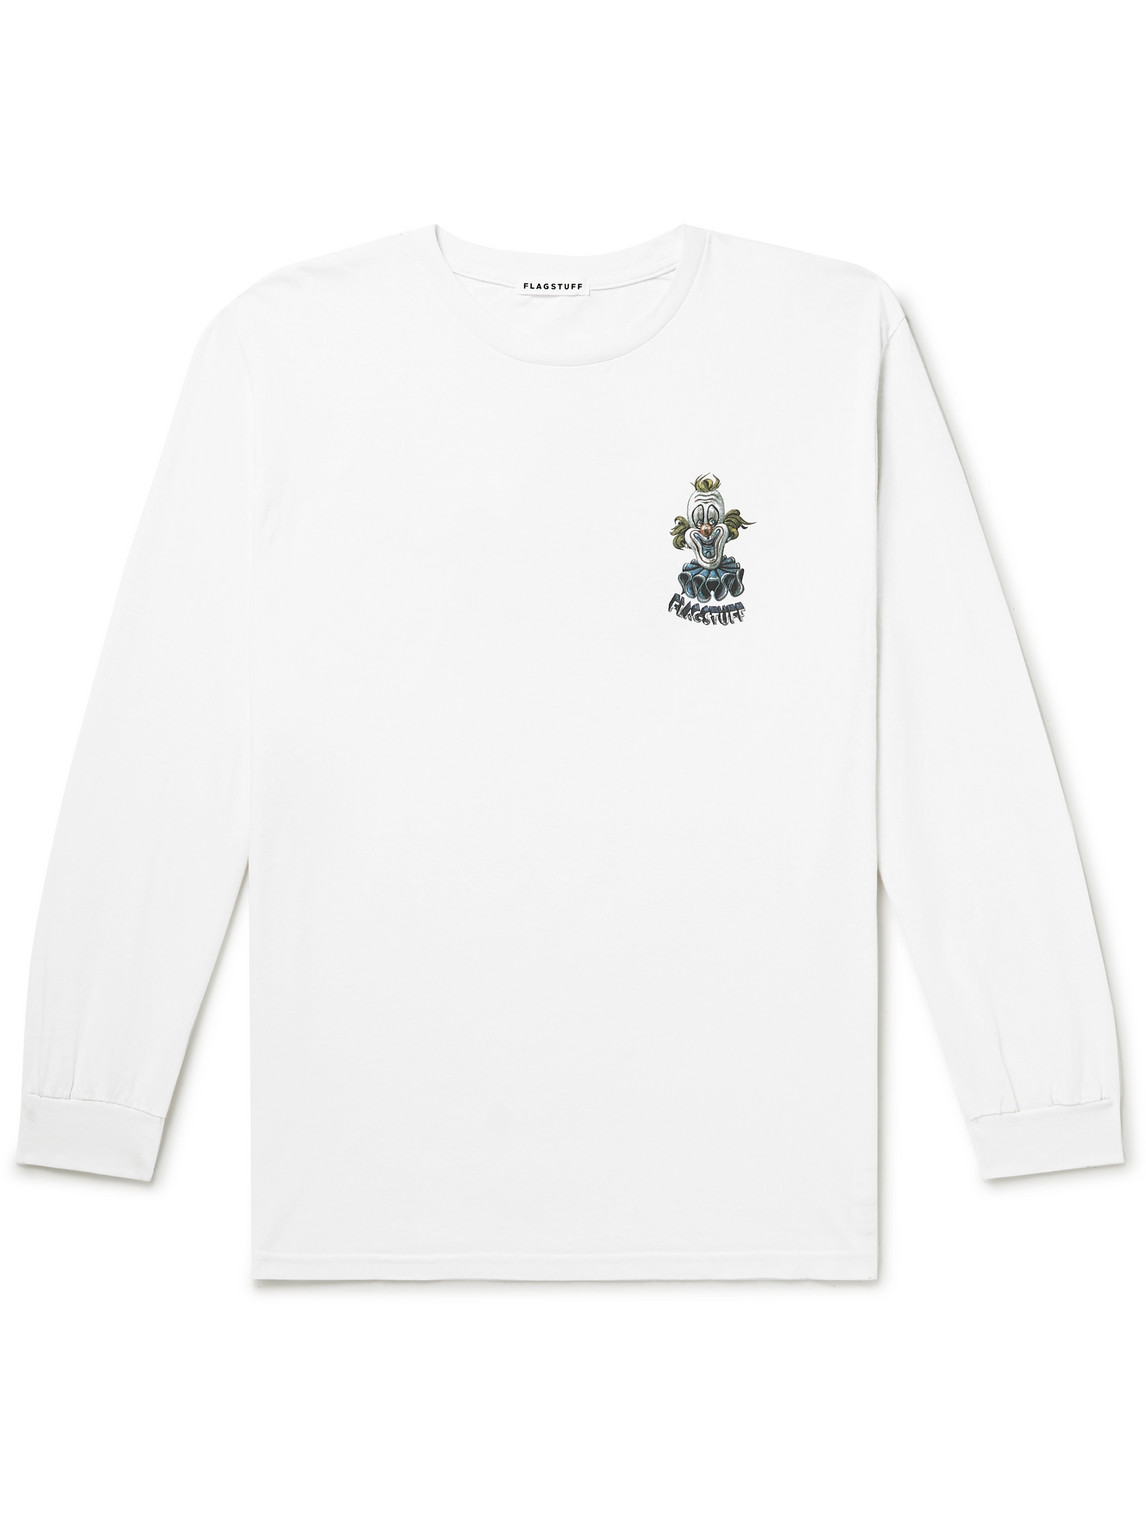 Flagstuff Printed Cotton-Jersey T-Shirt